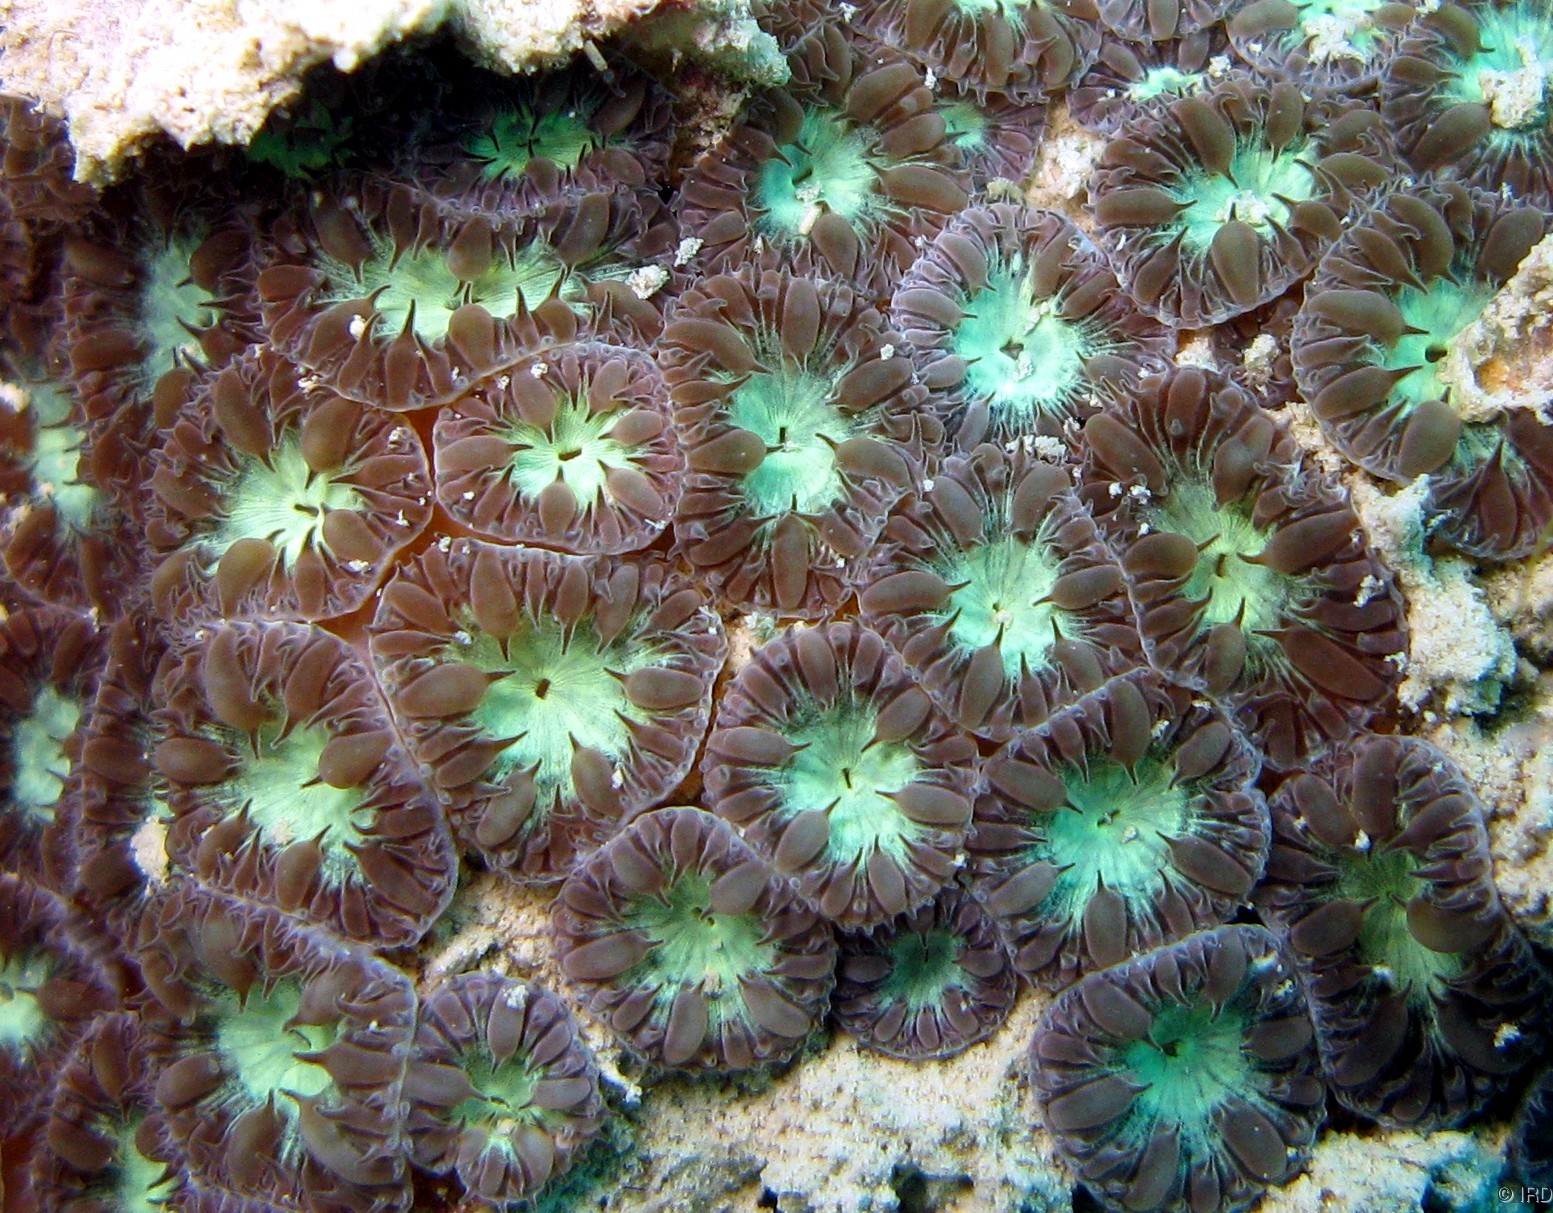 Blastomussa merleti - Close up of a colony in situ - HS0235